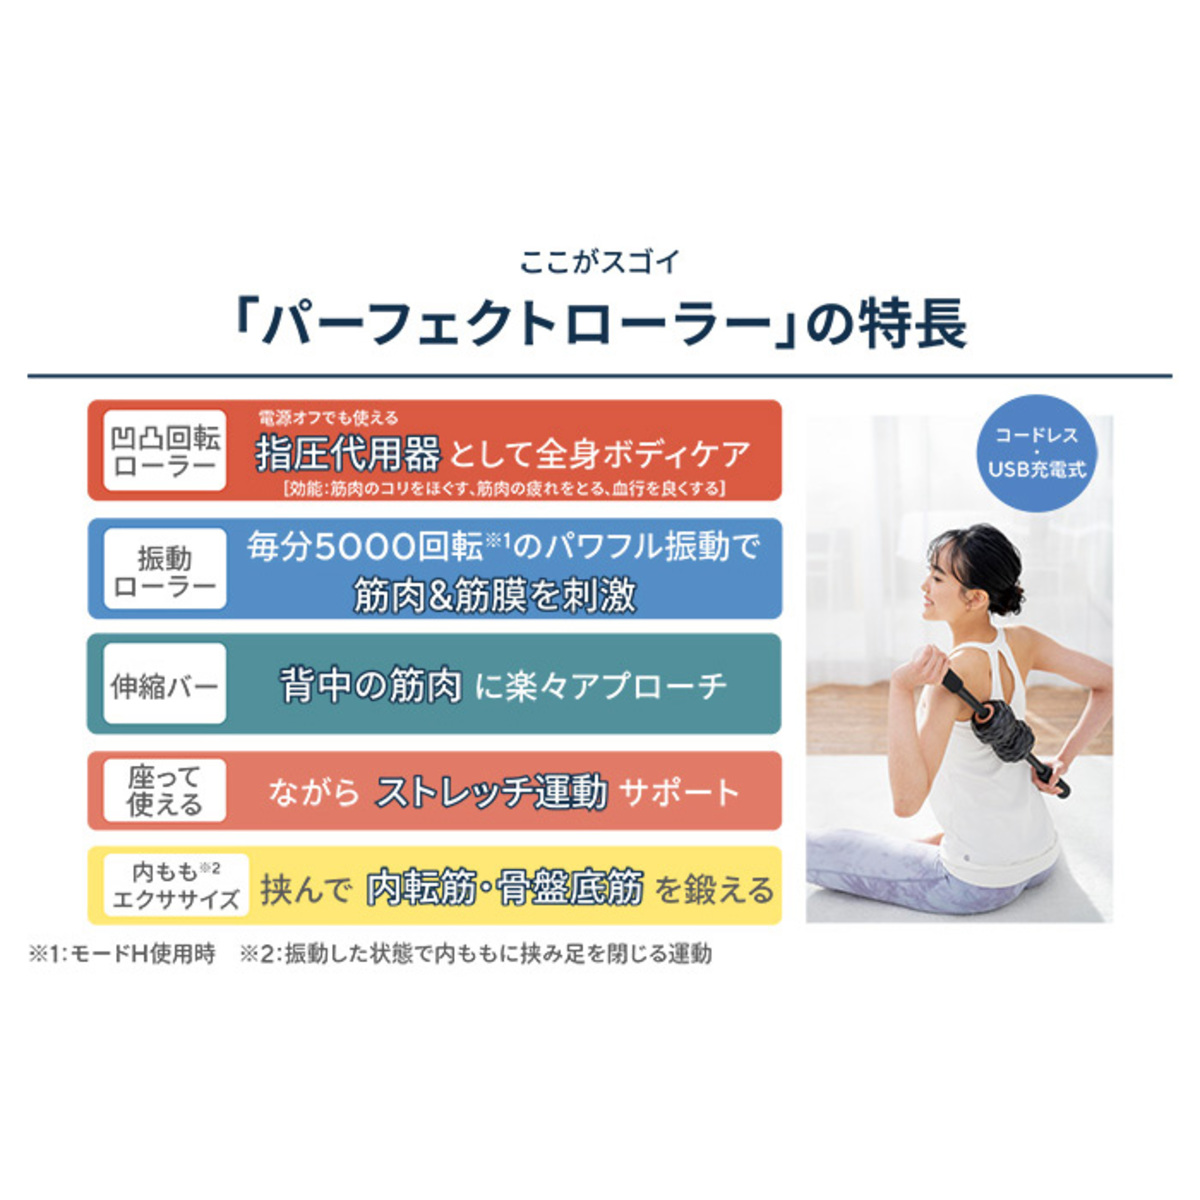 BreastTop パーフェクトローラー ブレストトップ（Breast Top） - QVC.jp